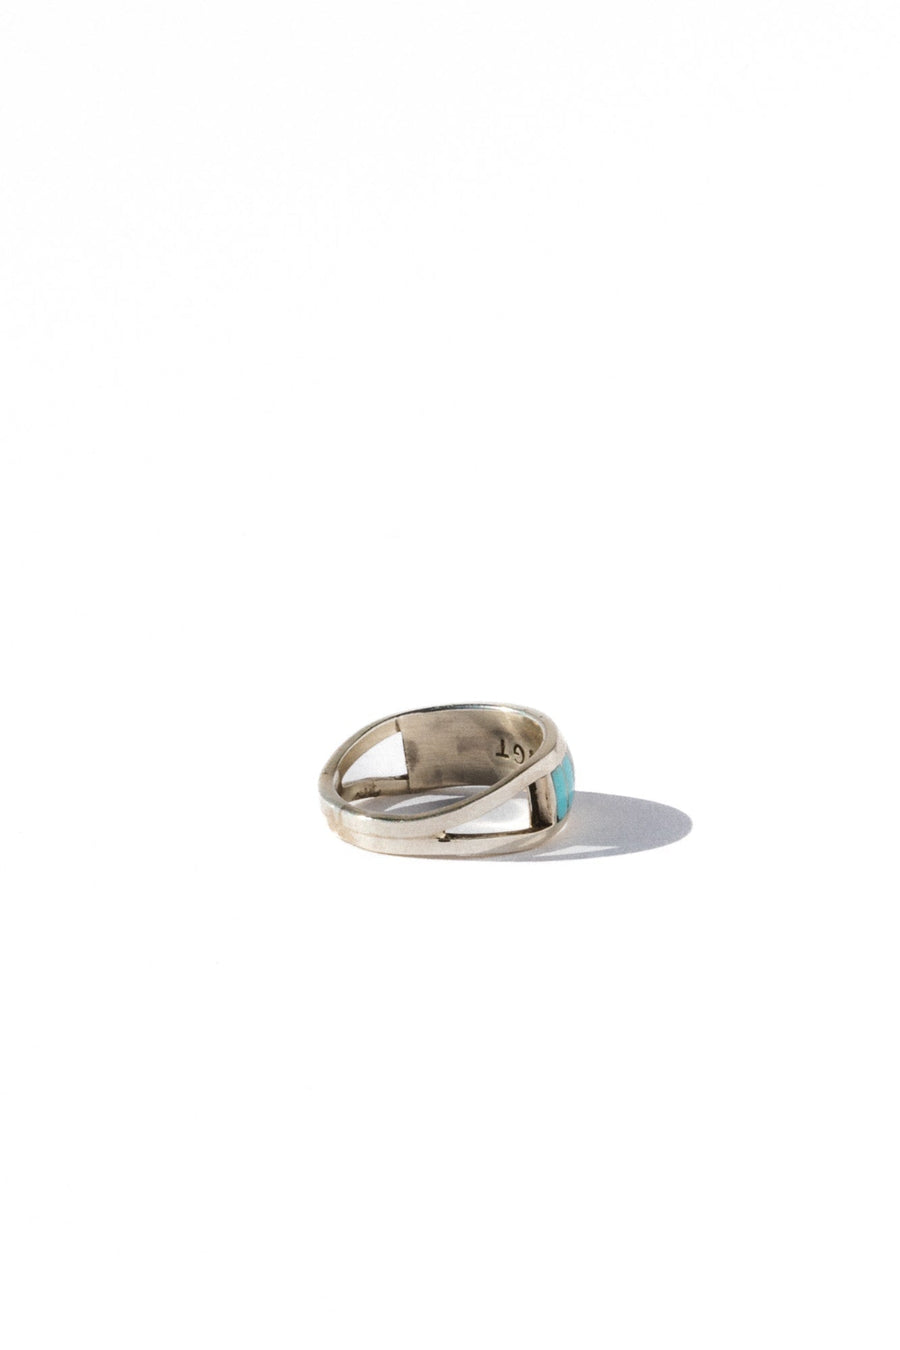 Sunwest Jewelry Silver / US 8 Dyami Native American Inlay Ring